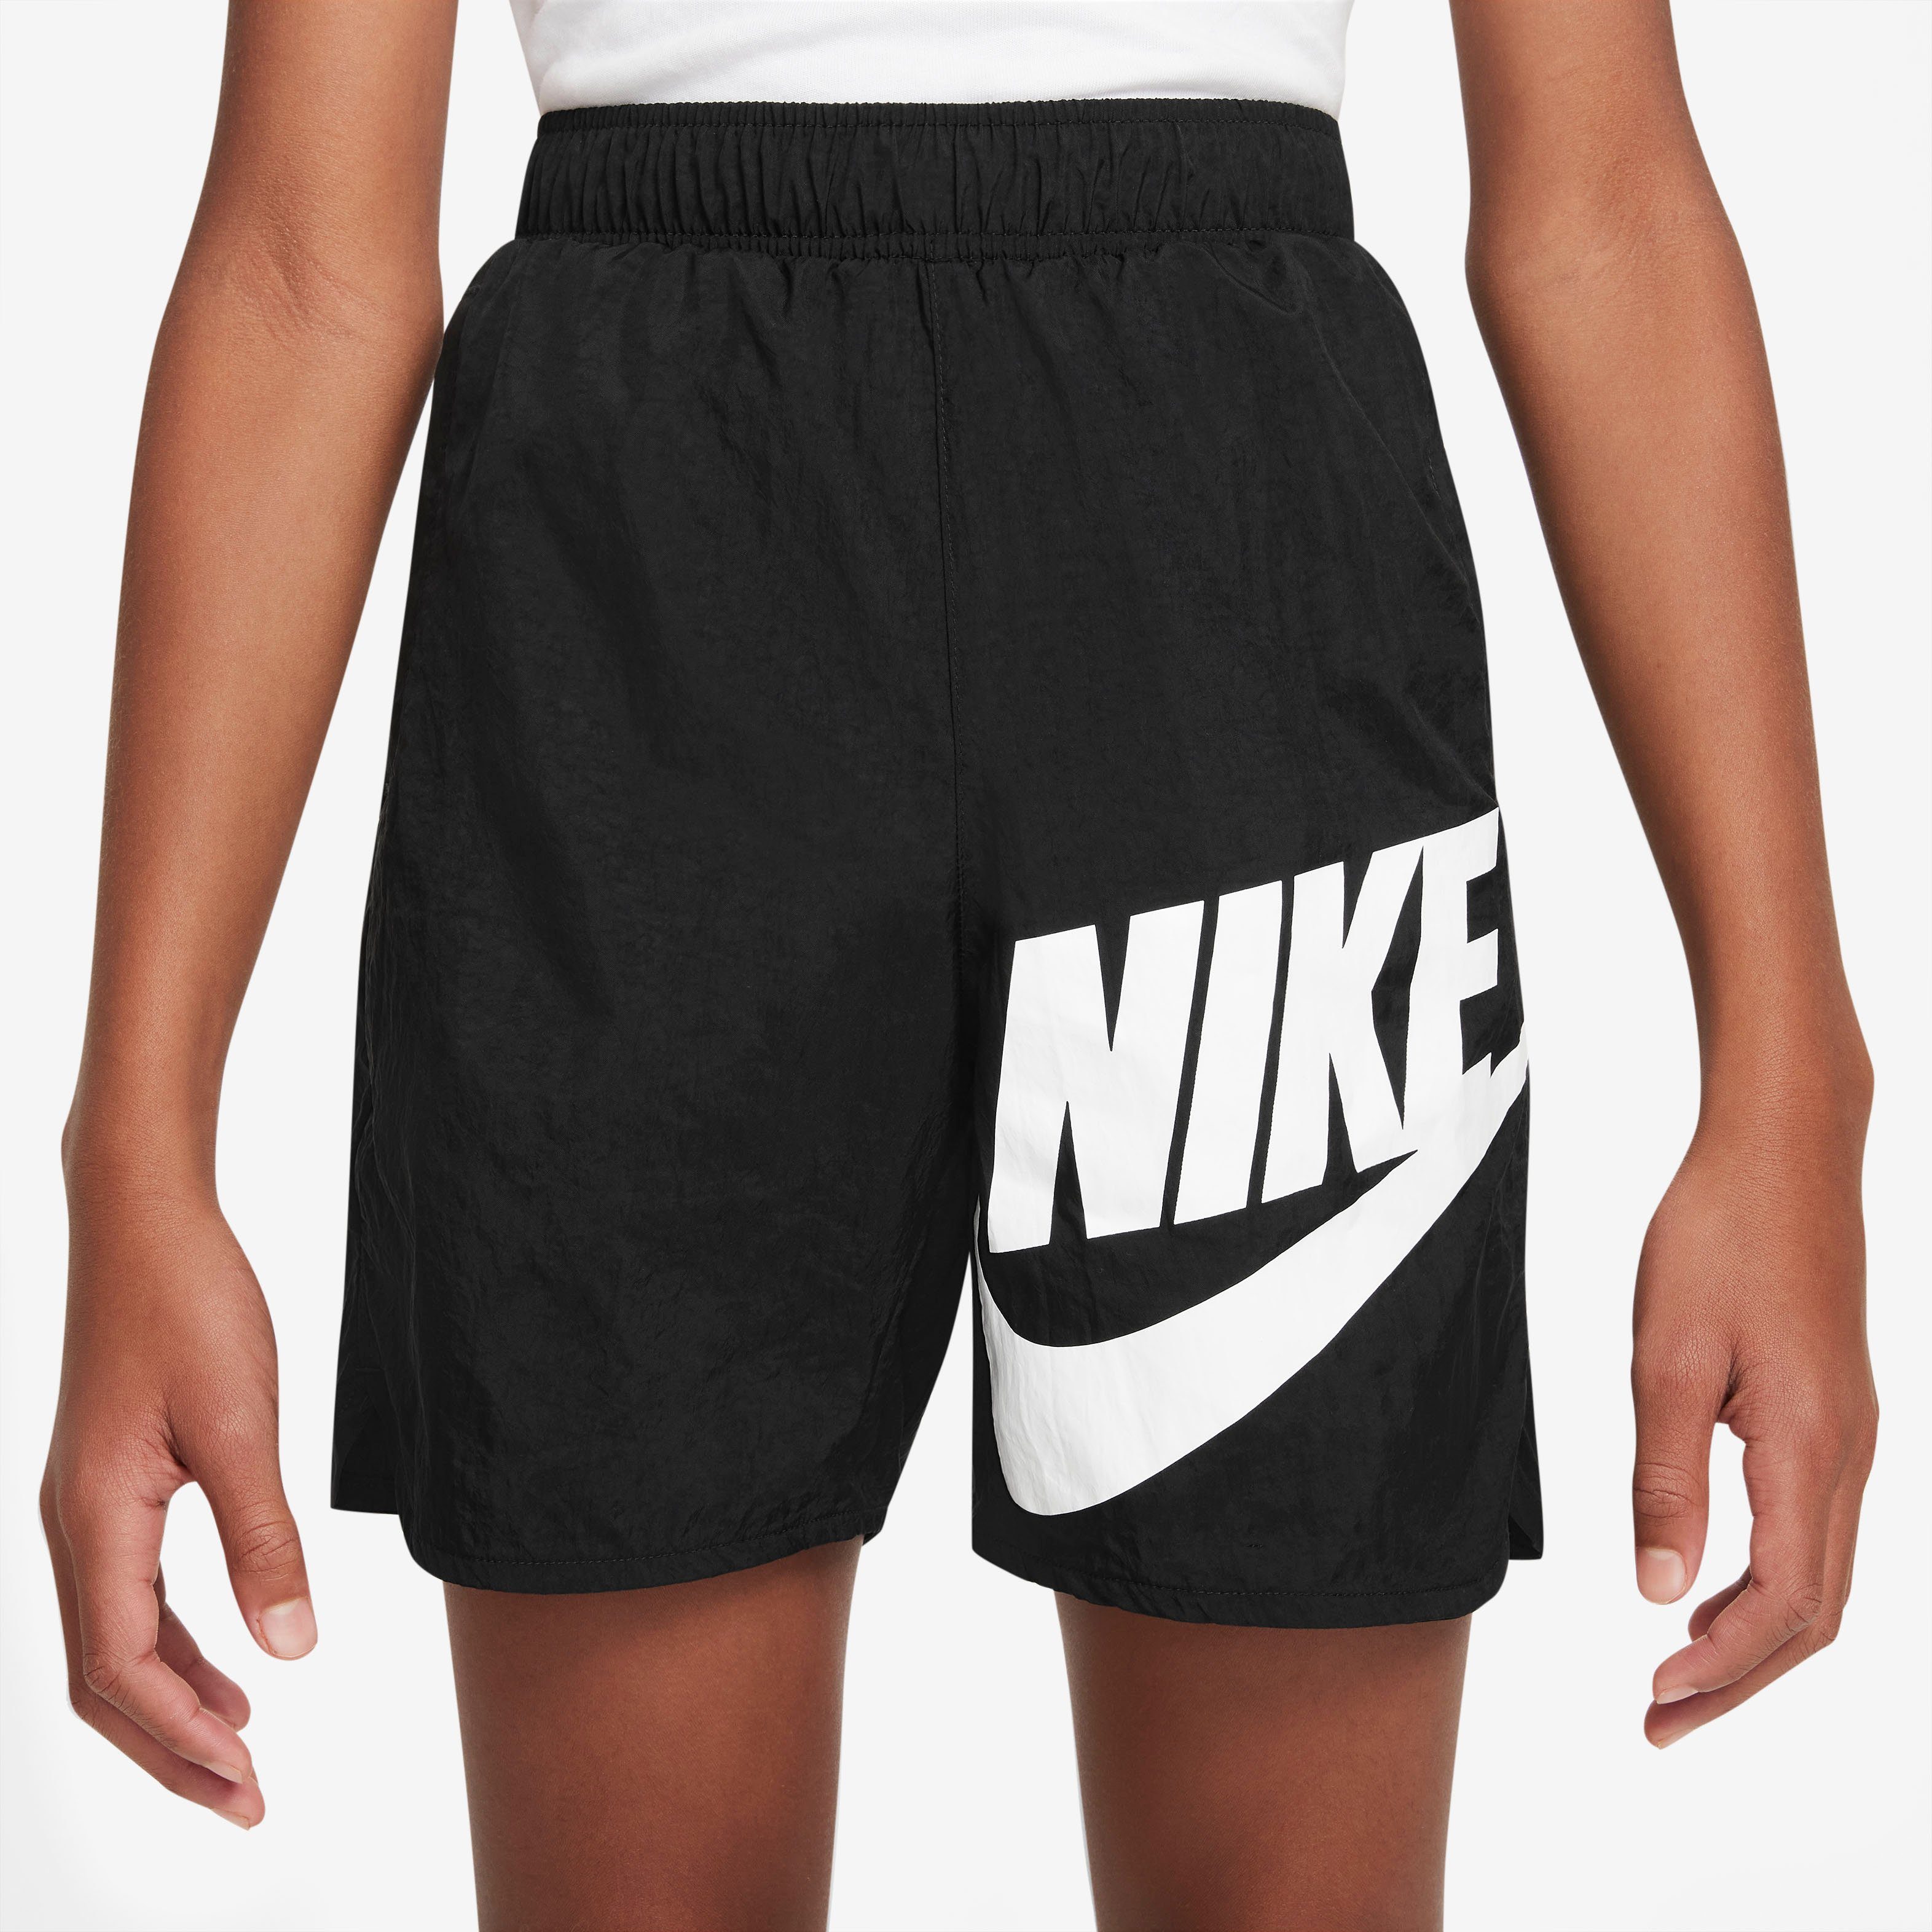 Shorts Sportswear (Boys) Kids' schwarz Big Woven Nike Shorts